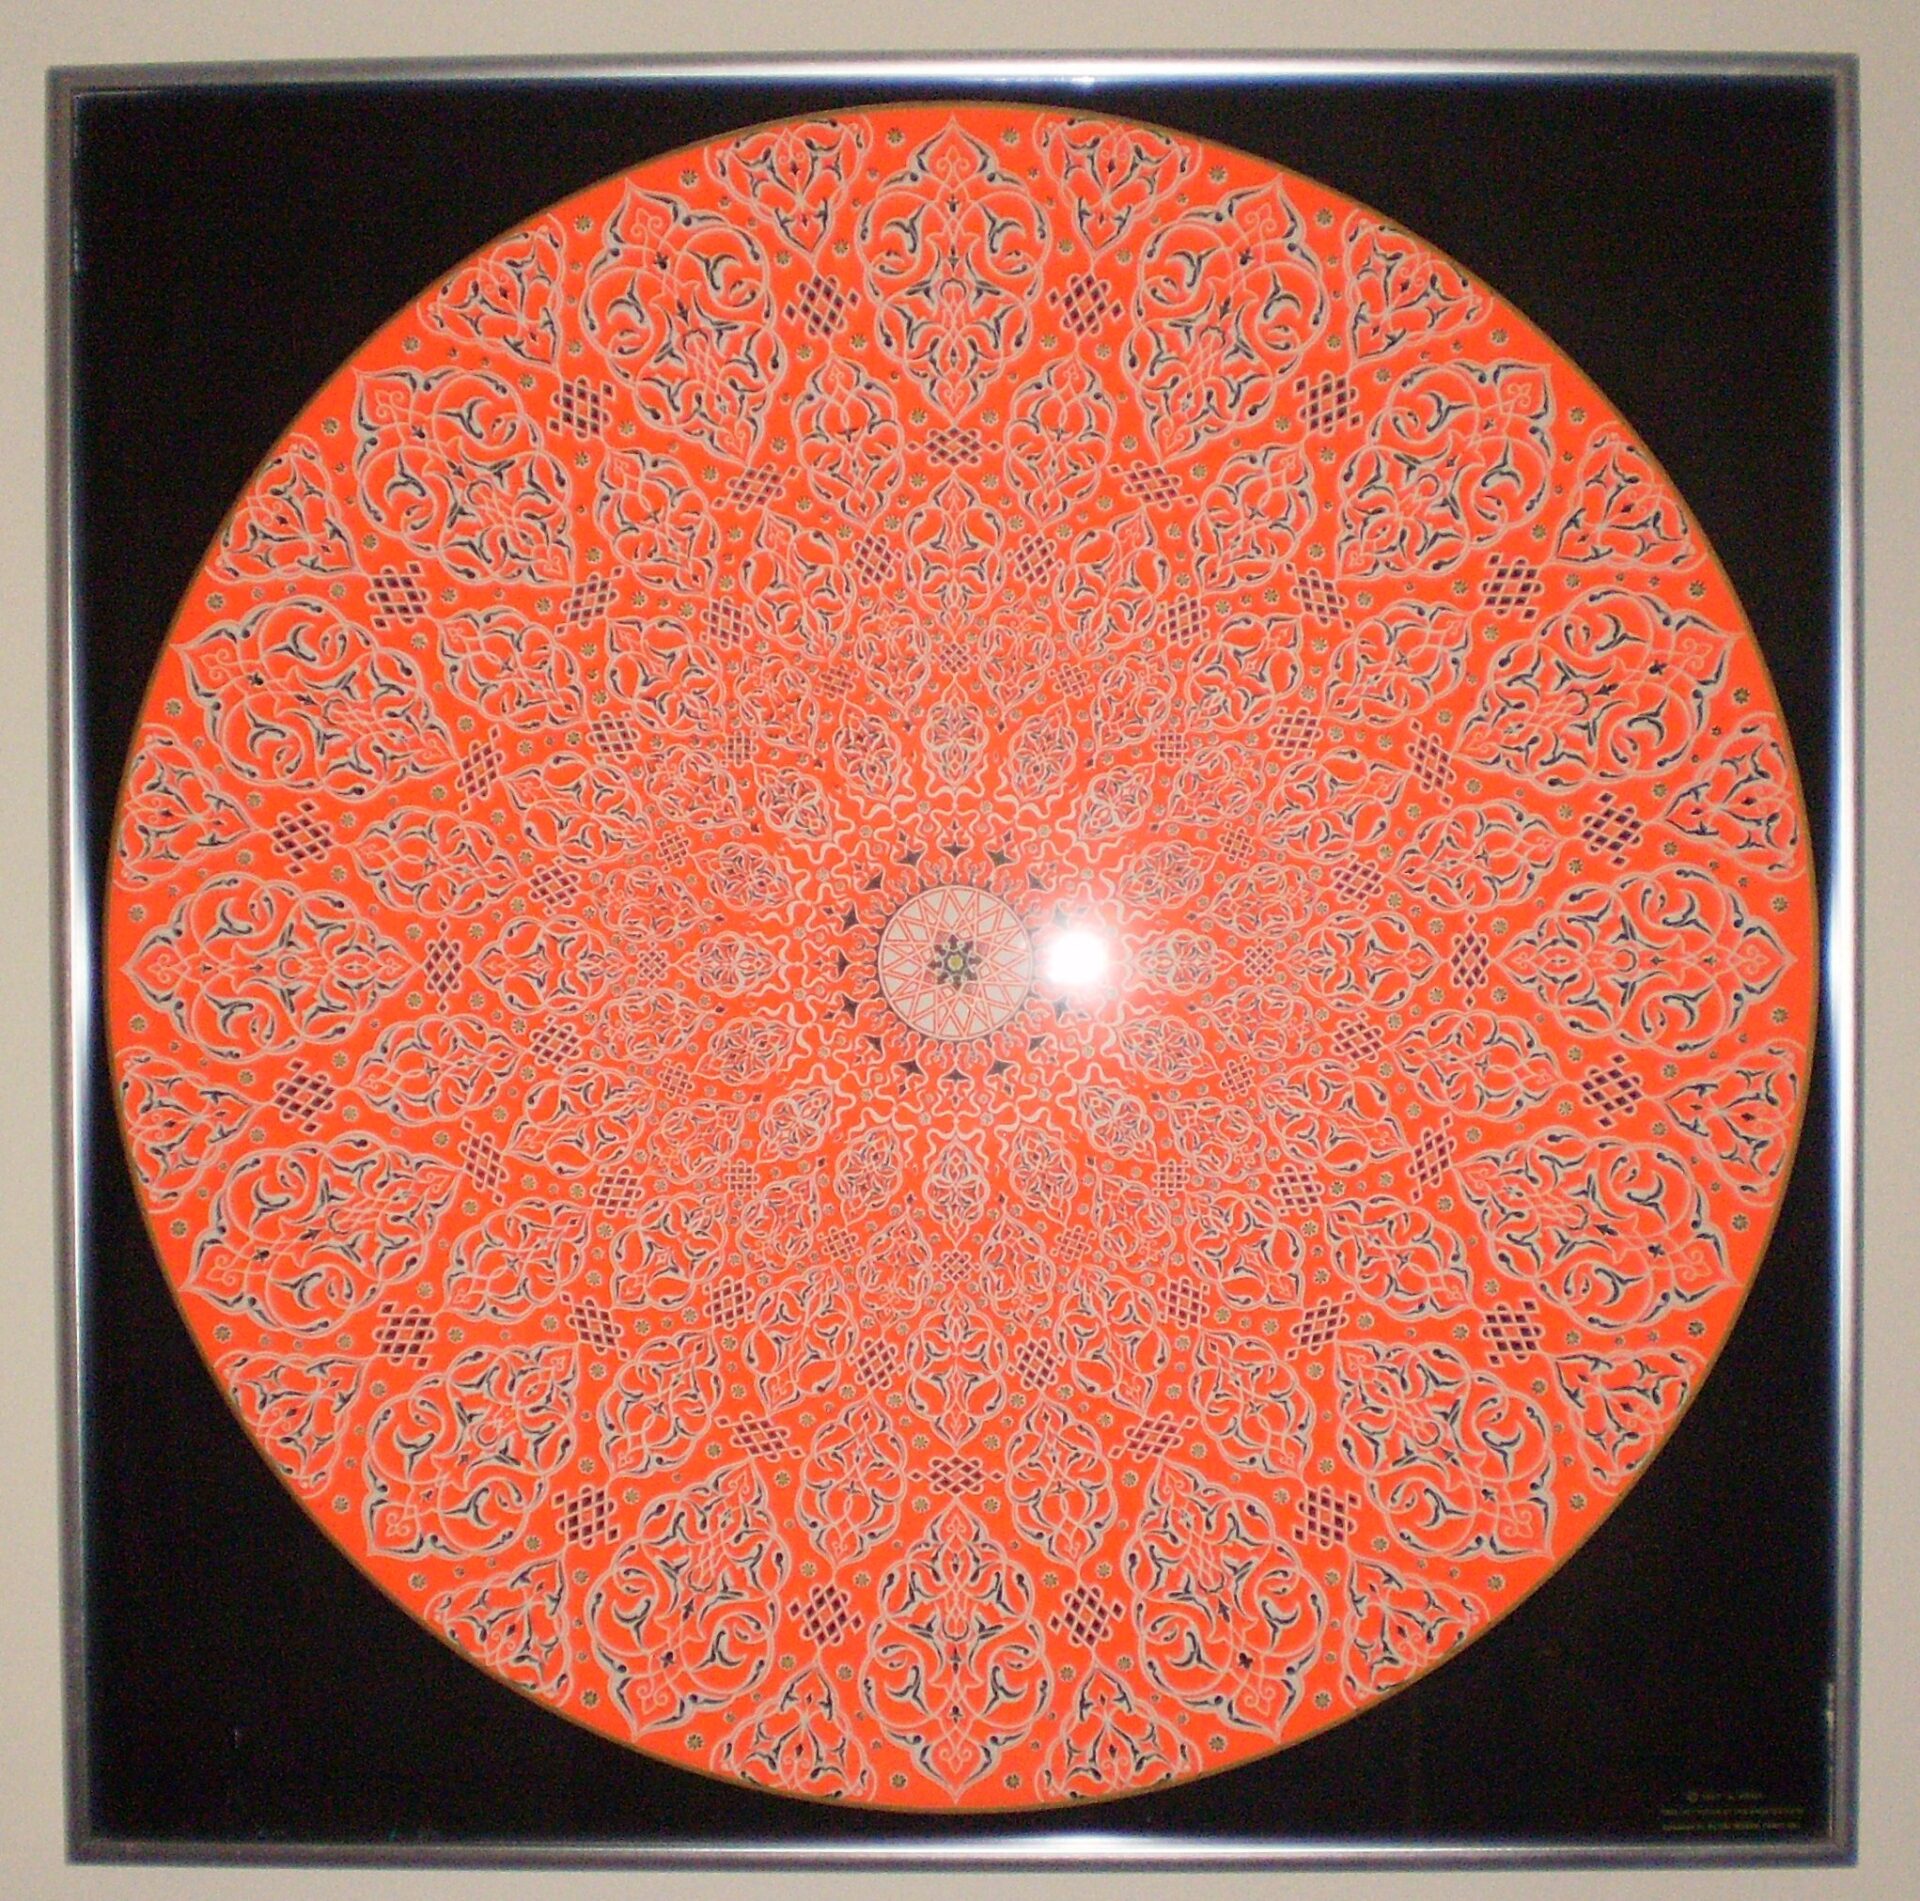 1960s psychedelic mandala poster